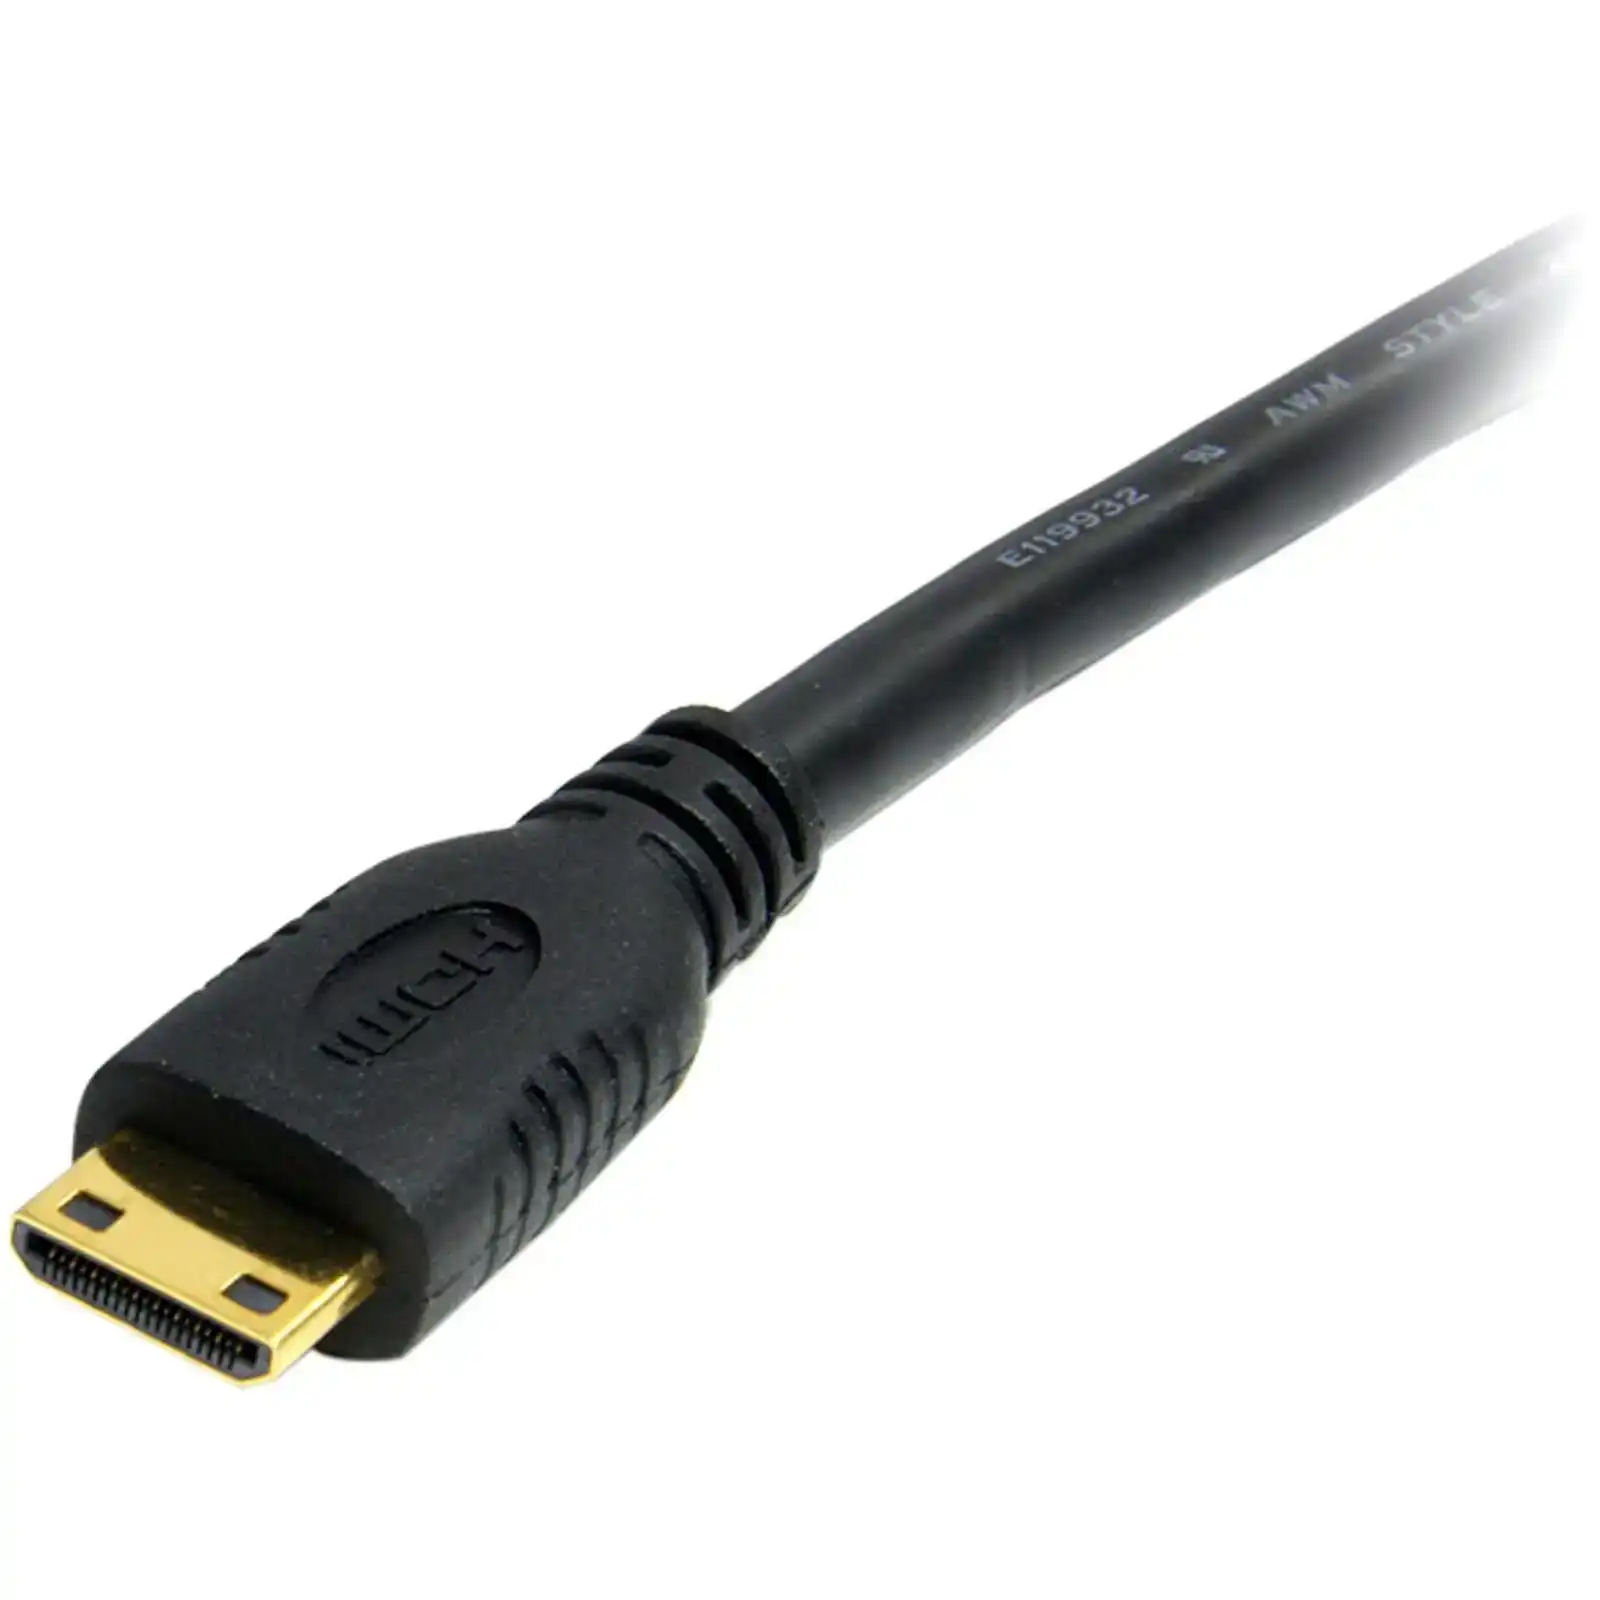 Star Tech 2M Male HDMI to Male Mini HDMI Cable w/ Ethernet for Camera/Smartphone